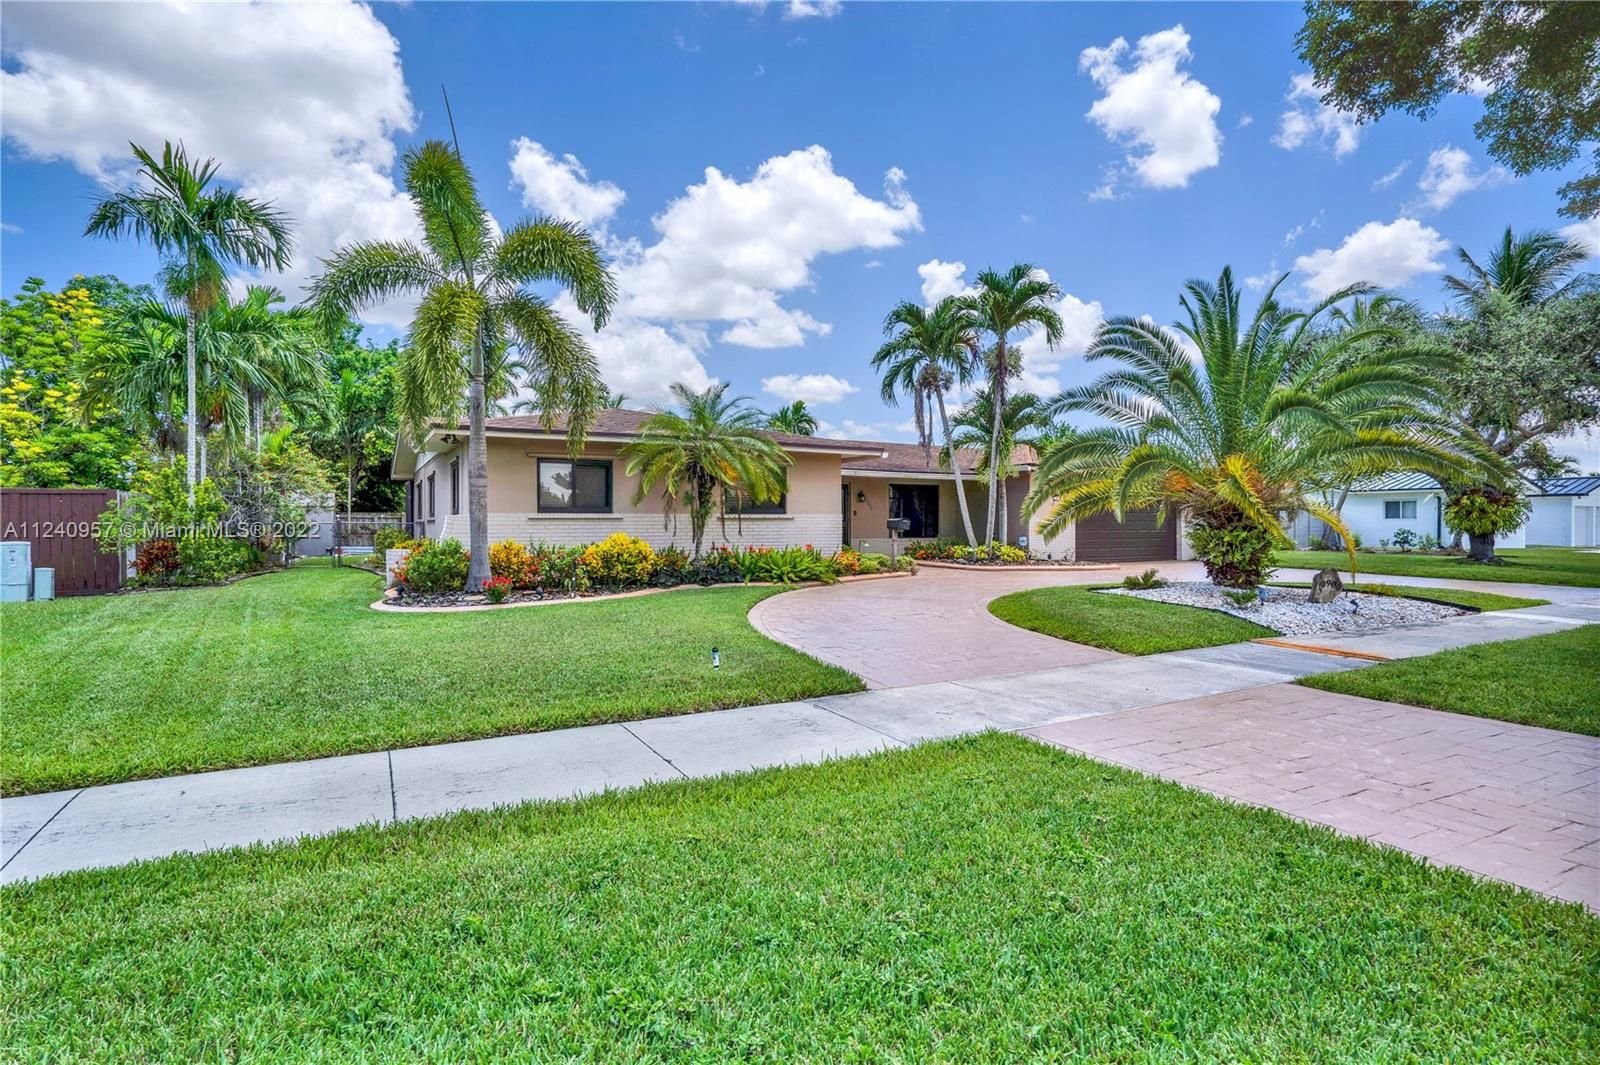 Real estate property located at 10900 128th St, Miami-Dade County, Miami, FL